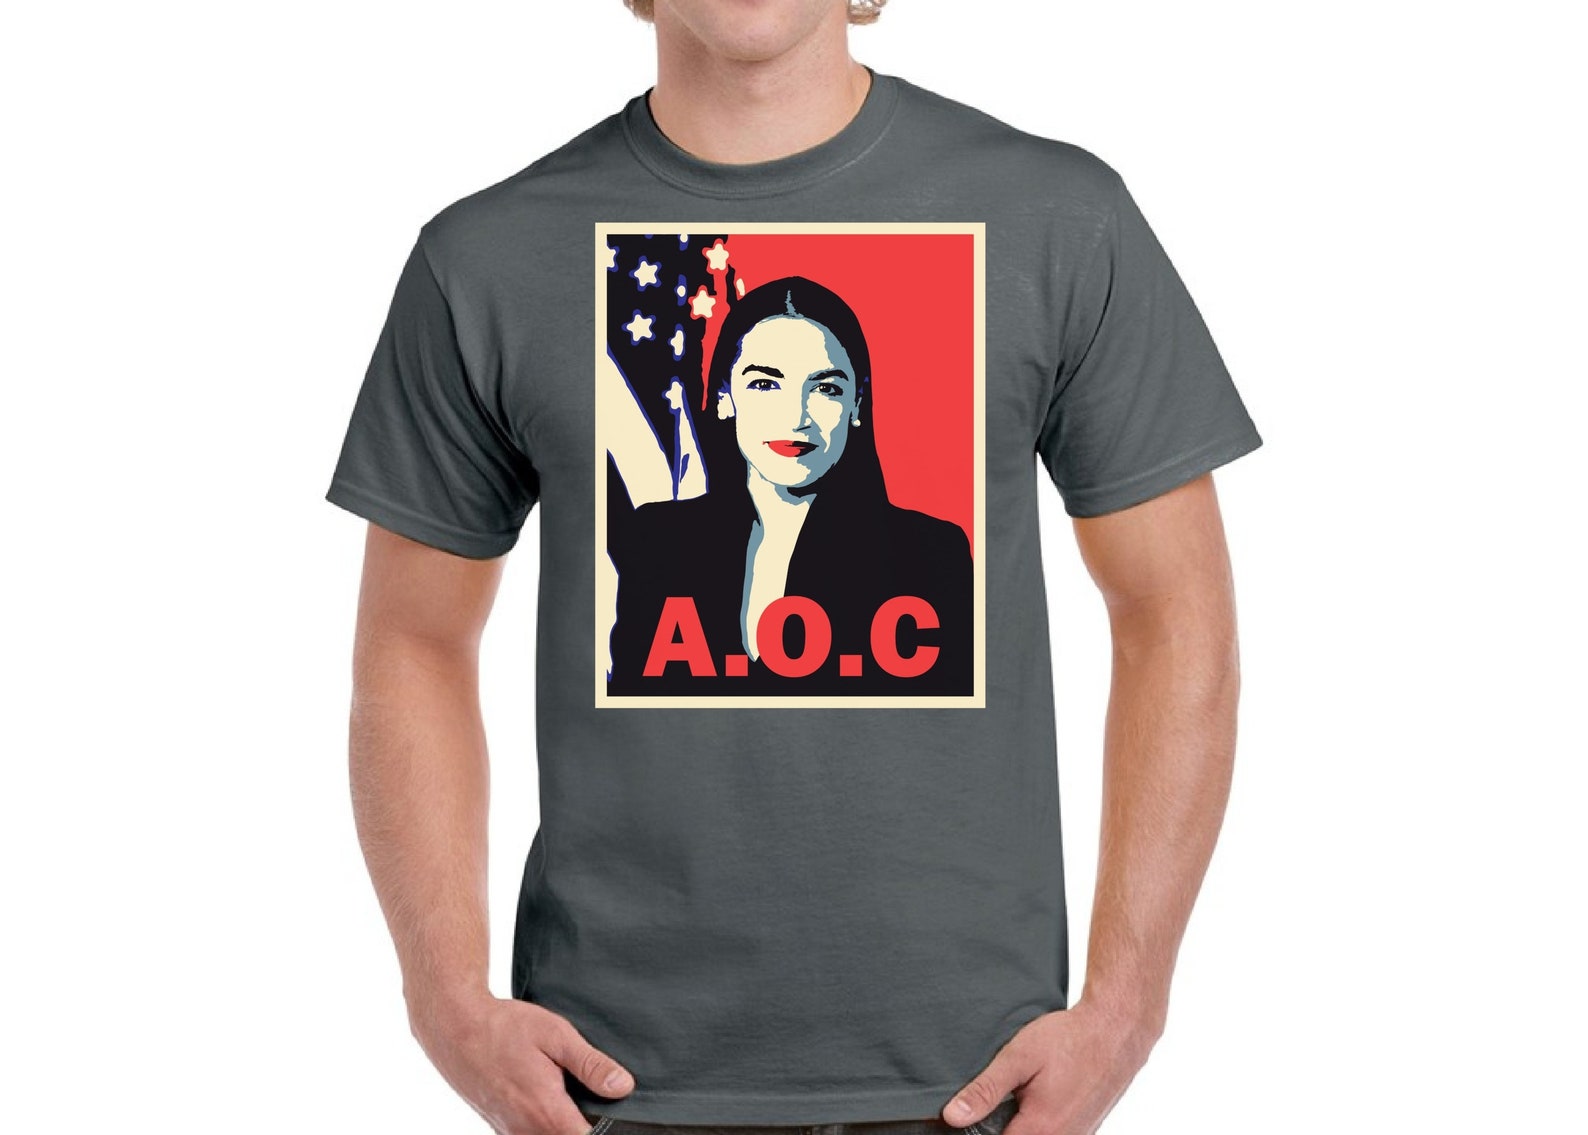 Aoc shirt